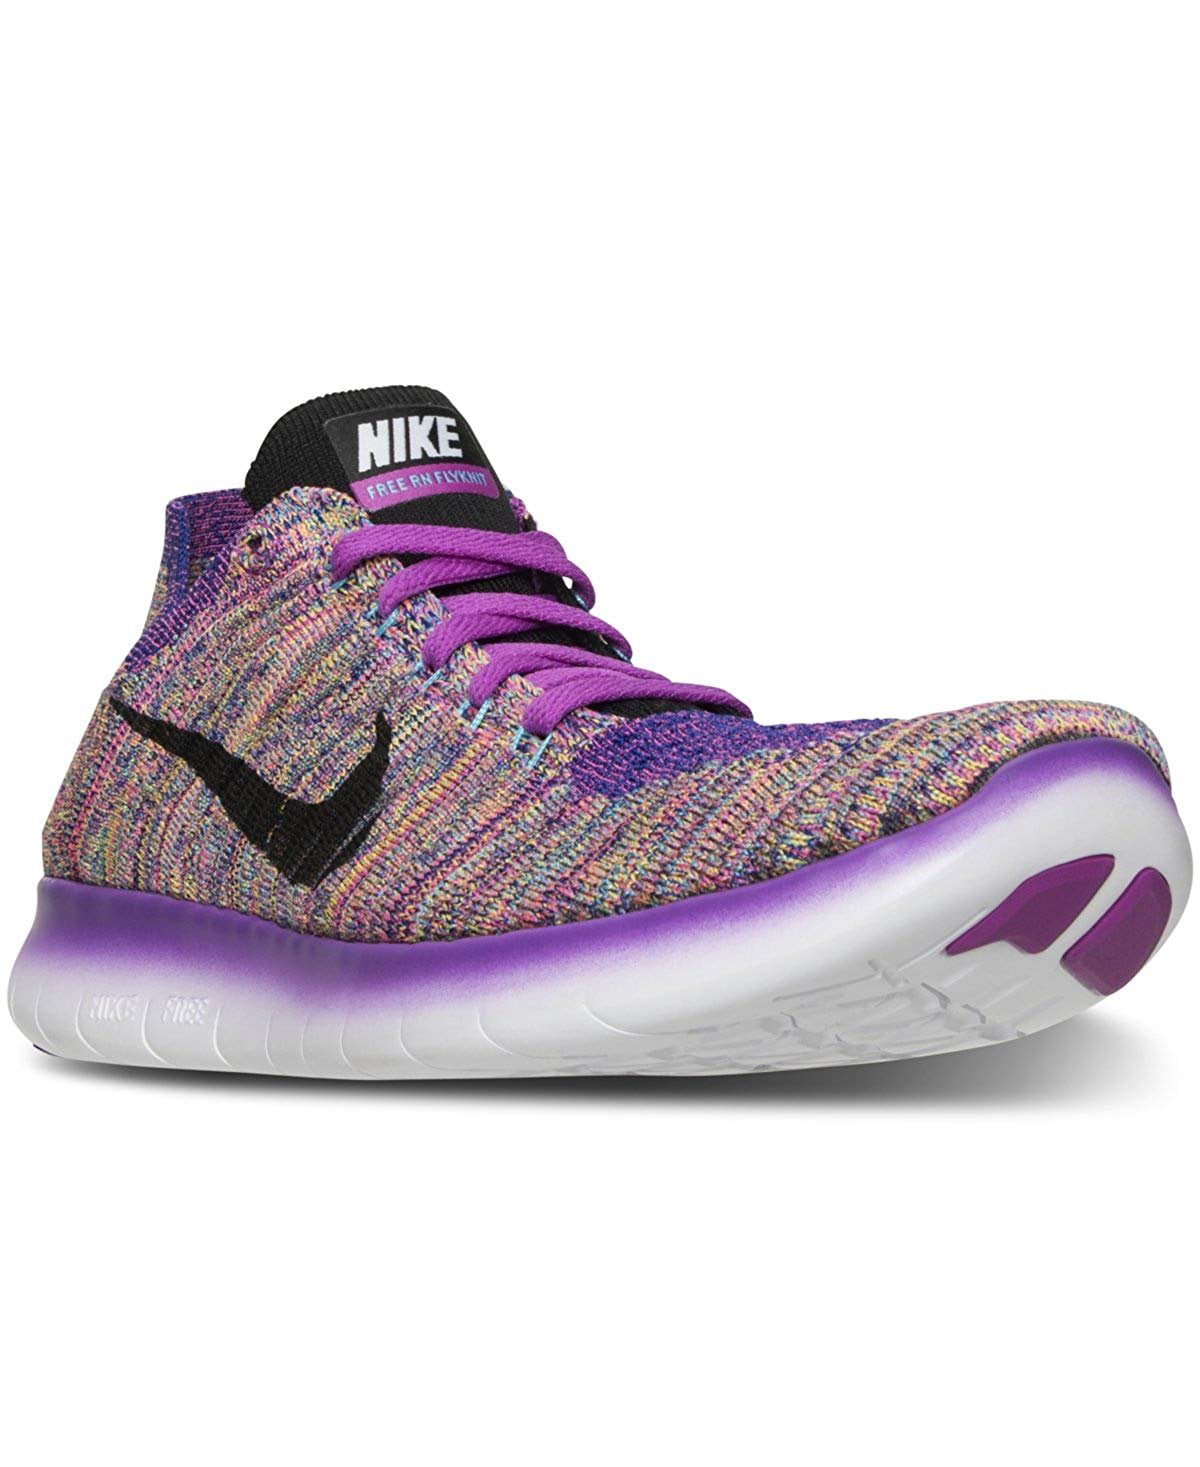 Nike Women's Free RN Flyknit Running - Walmart.com